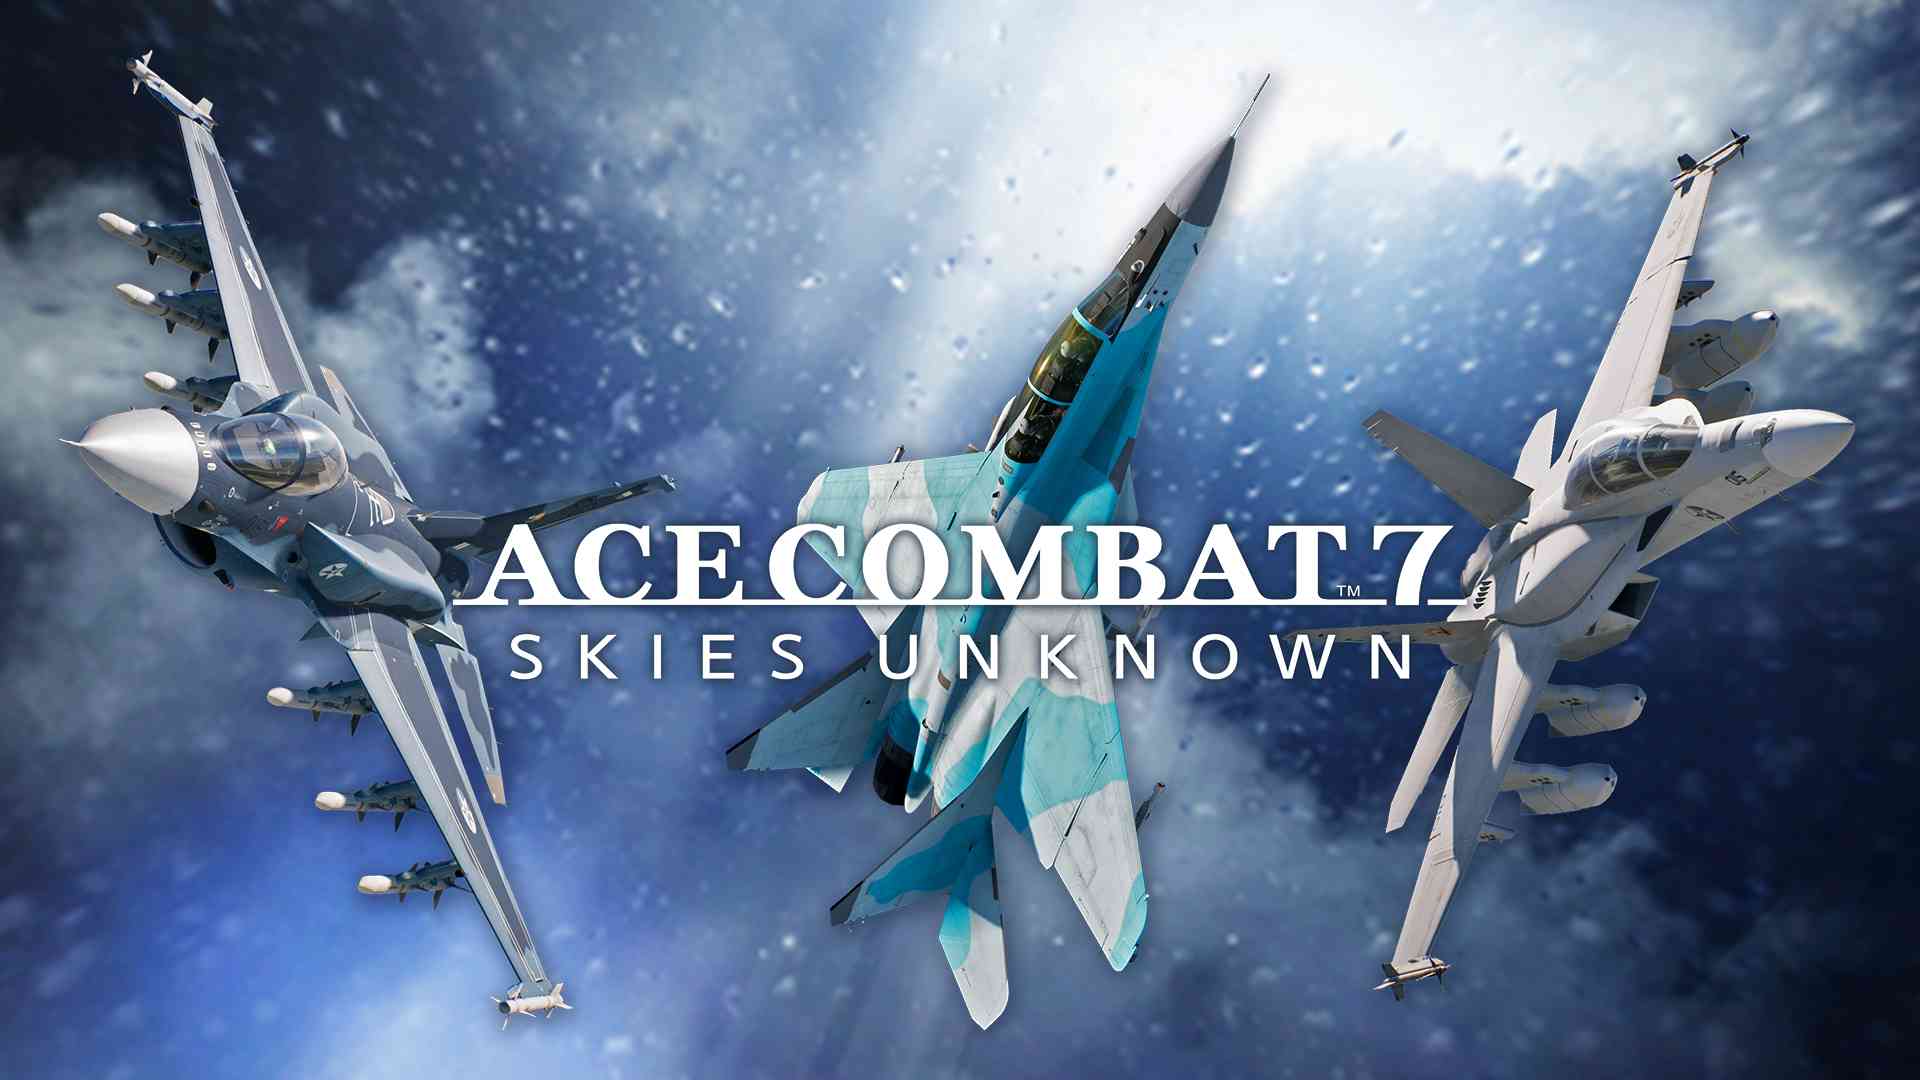 ACE COMBAT™7: SKIES UNKNOWN - Série de Aeronaves de Última Geração - Conjunto